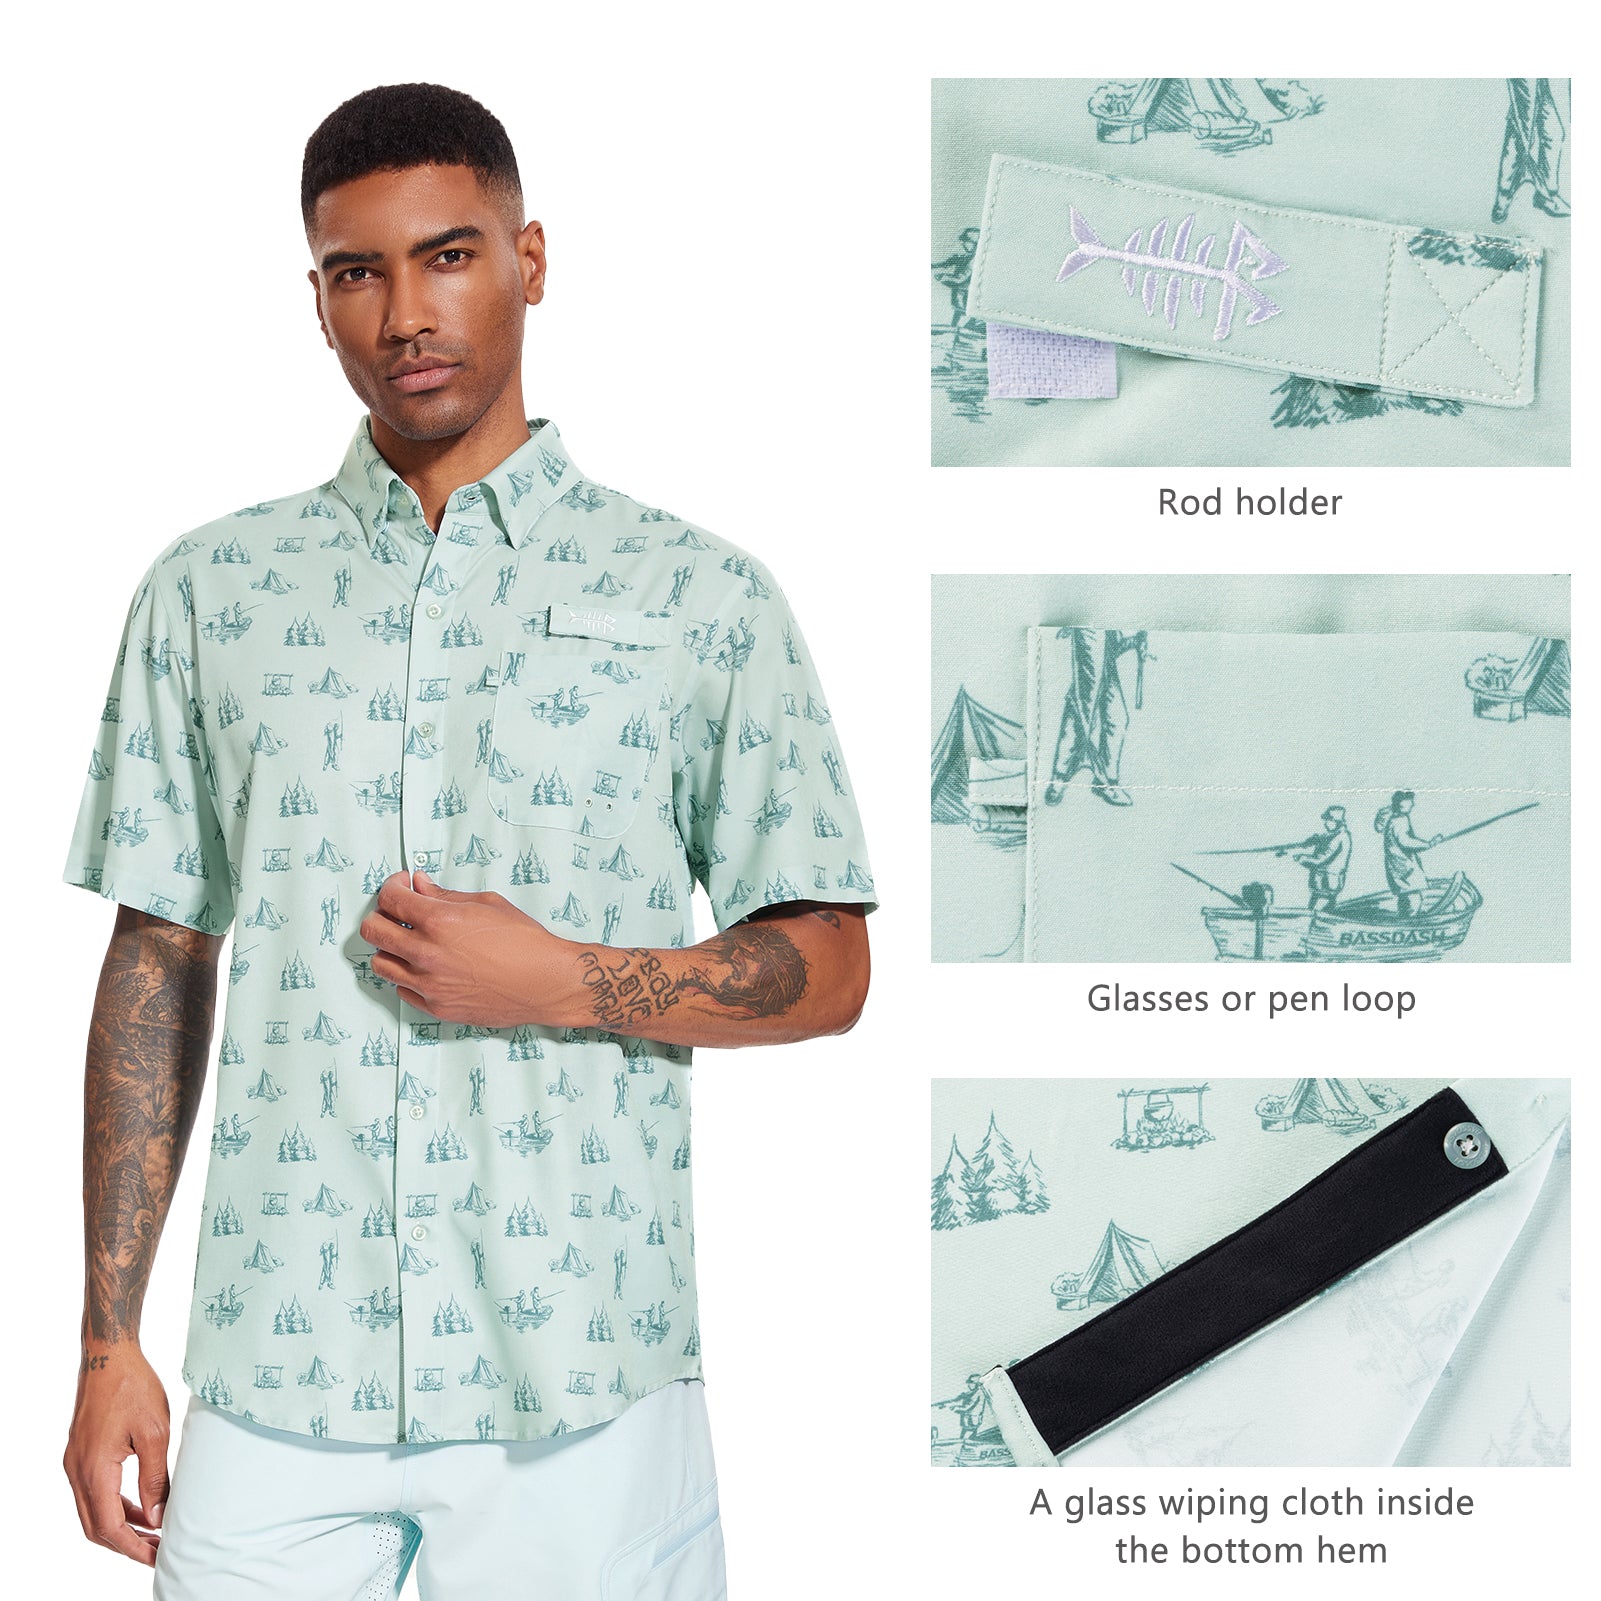 Mens Sun Protective Button Down Shirt | Bassdash Fishing White / XX-Large